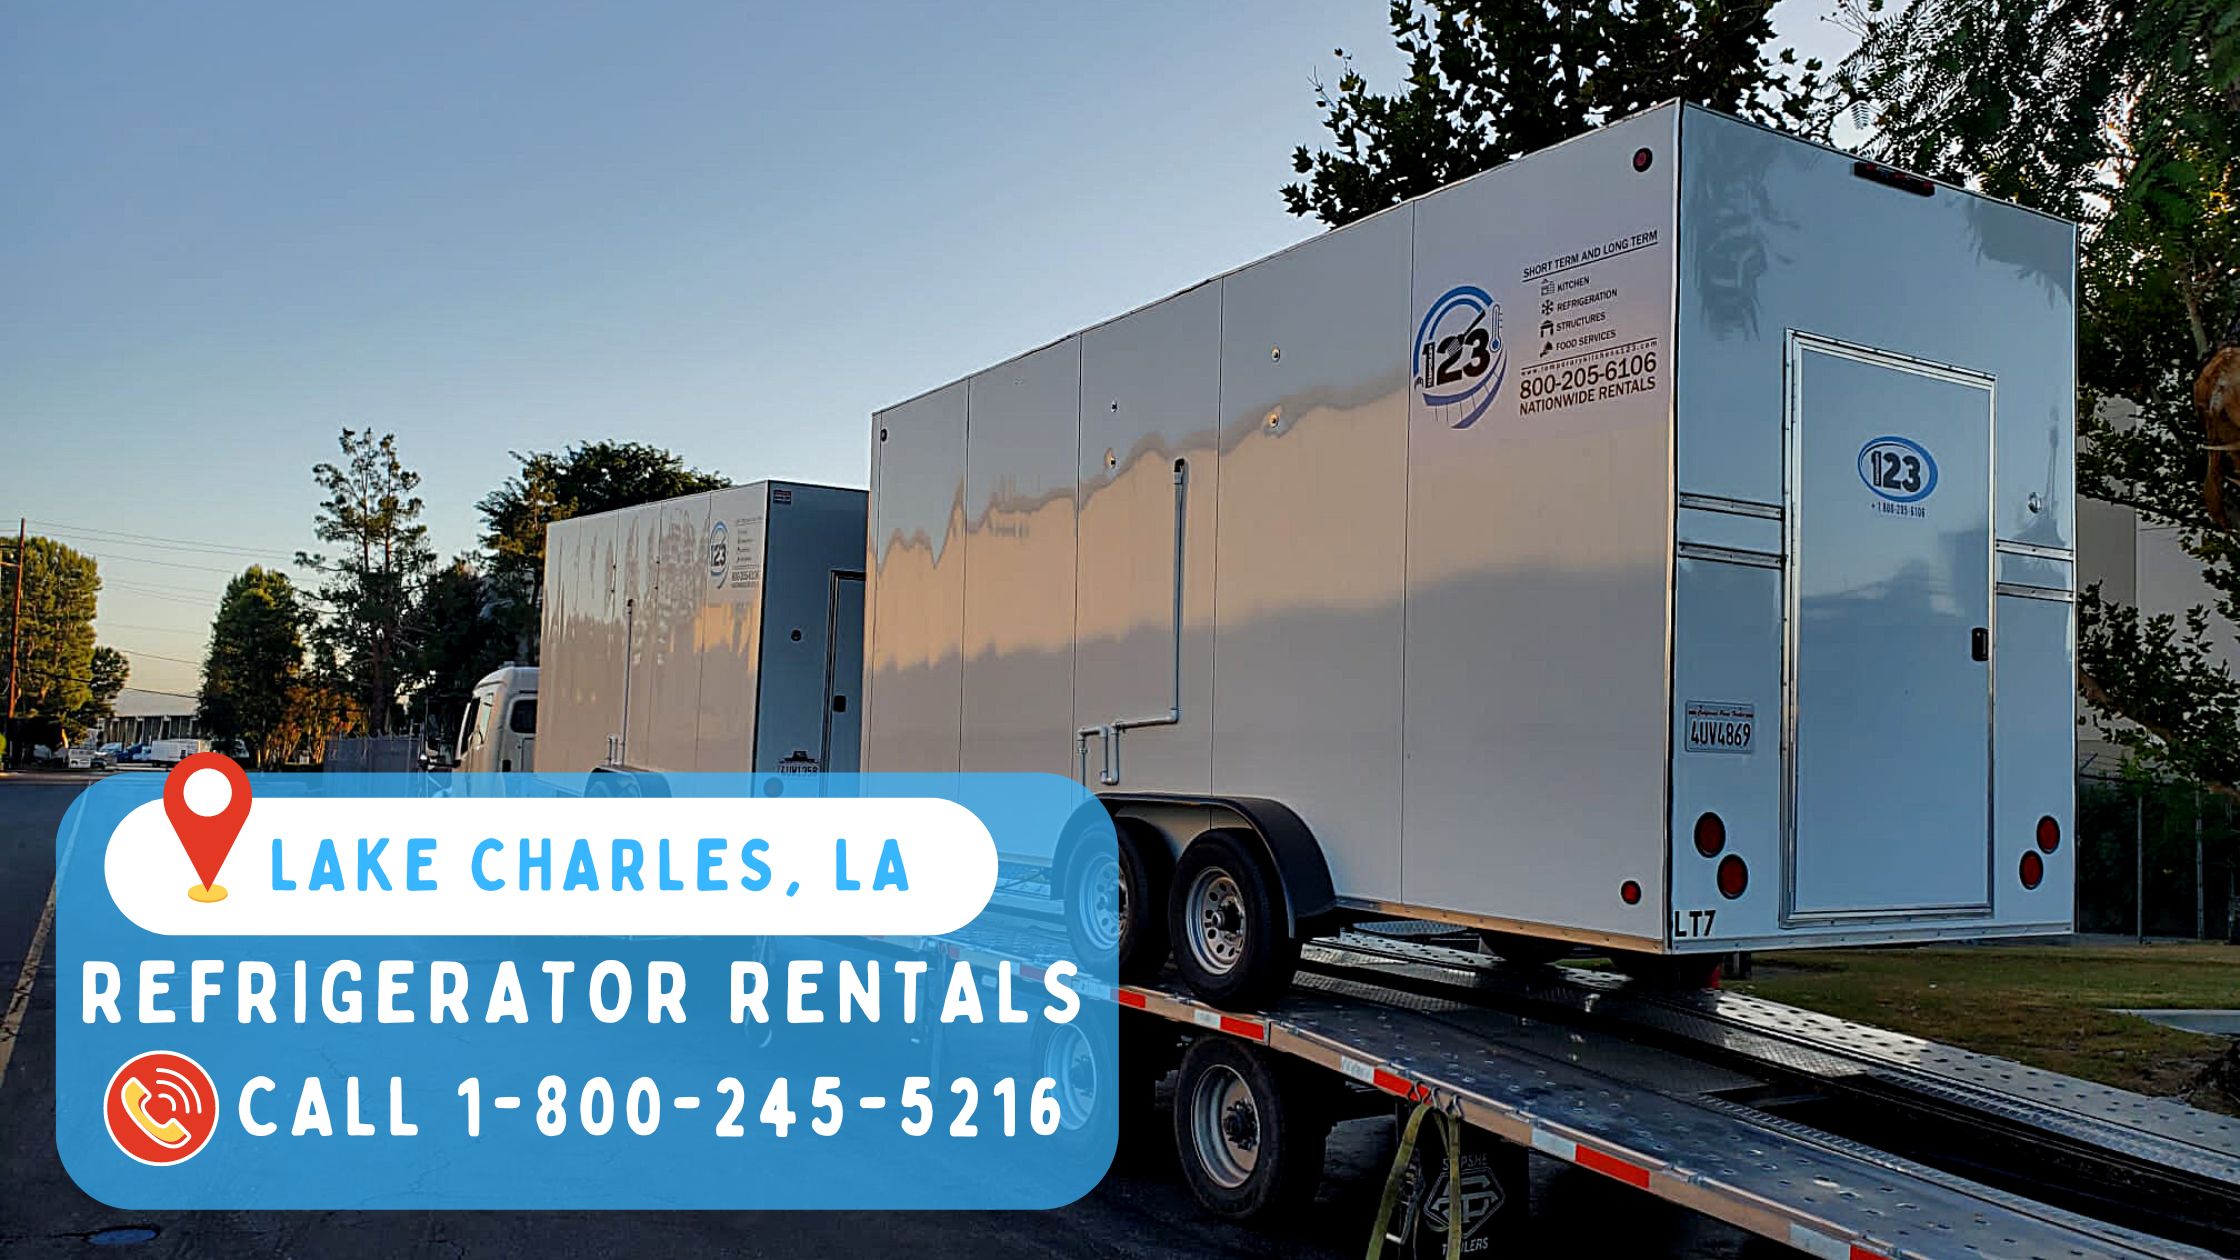 Refrigerator rentals in Lake Charles